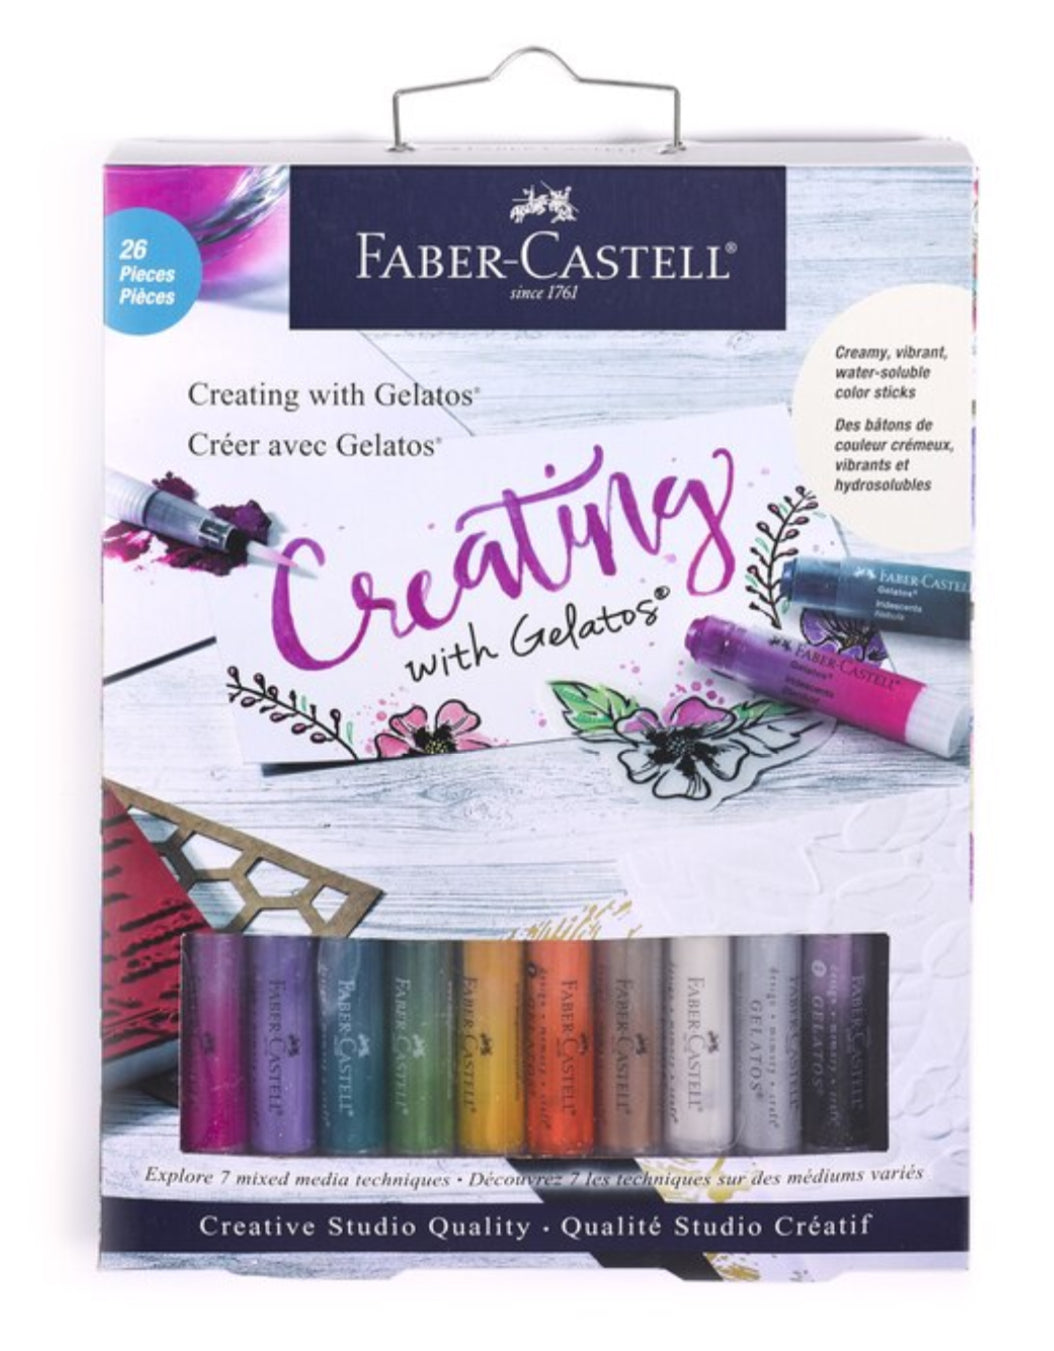 Faber-Castell Creating with Gelatos Set